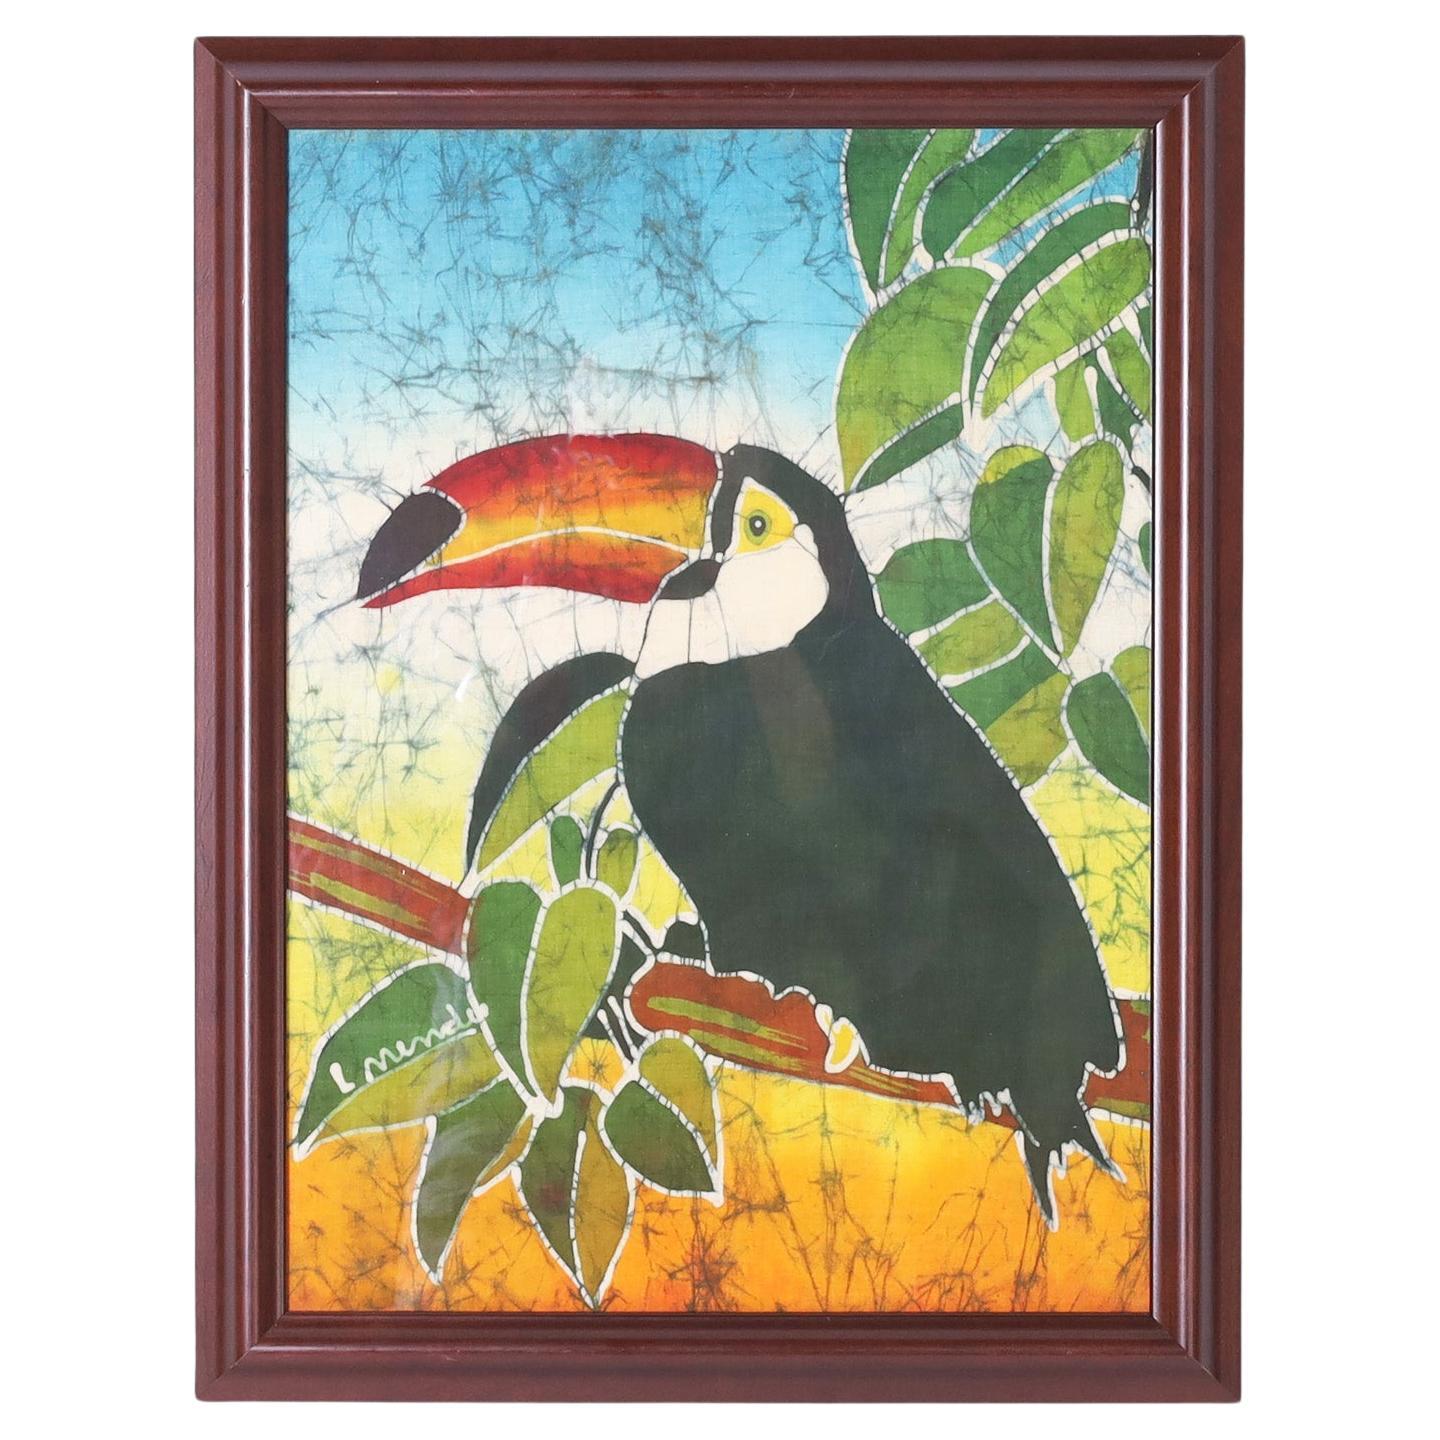 Batik Artwork of a Toucan For Sale